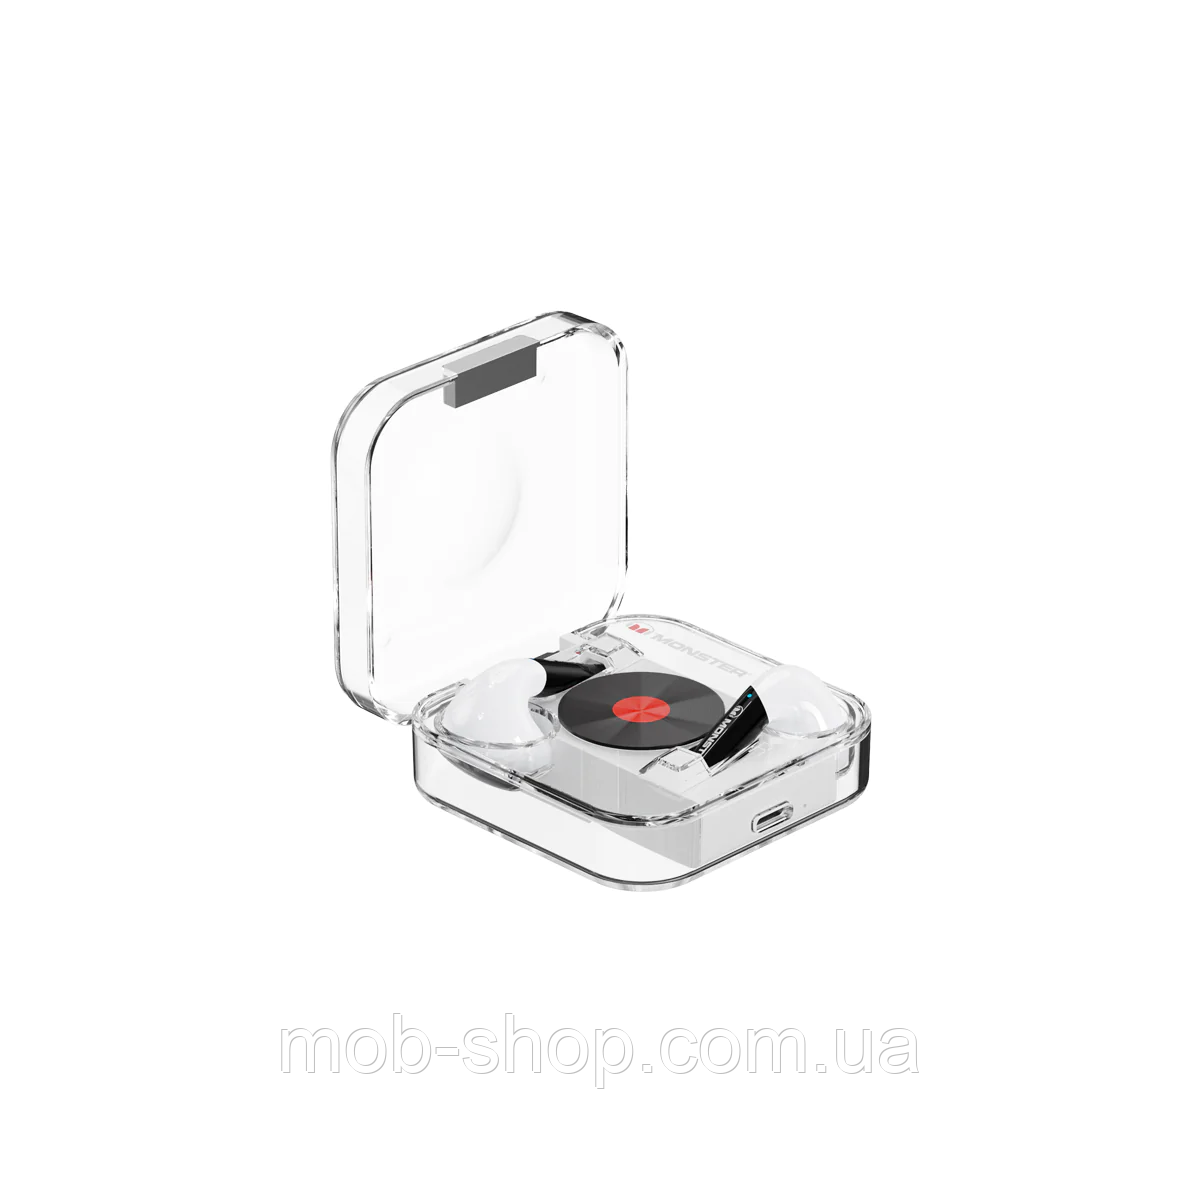 Бездротові навушники MONSTER Airmars XKT01 white Bluetooth 5.2 блютуз-навушники в кейсі